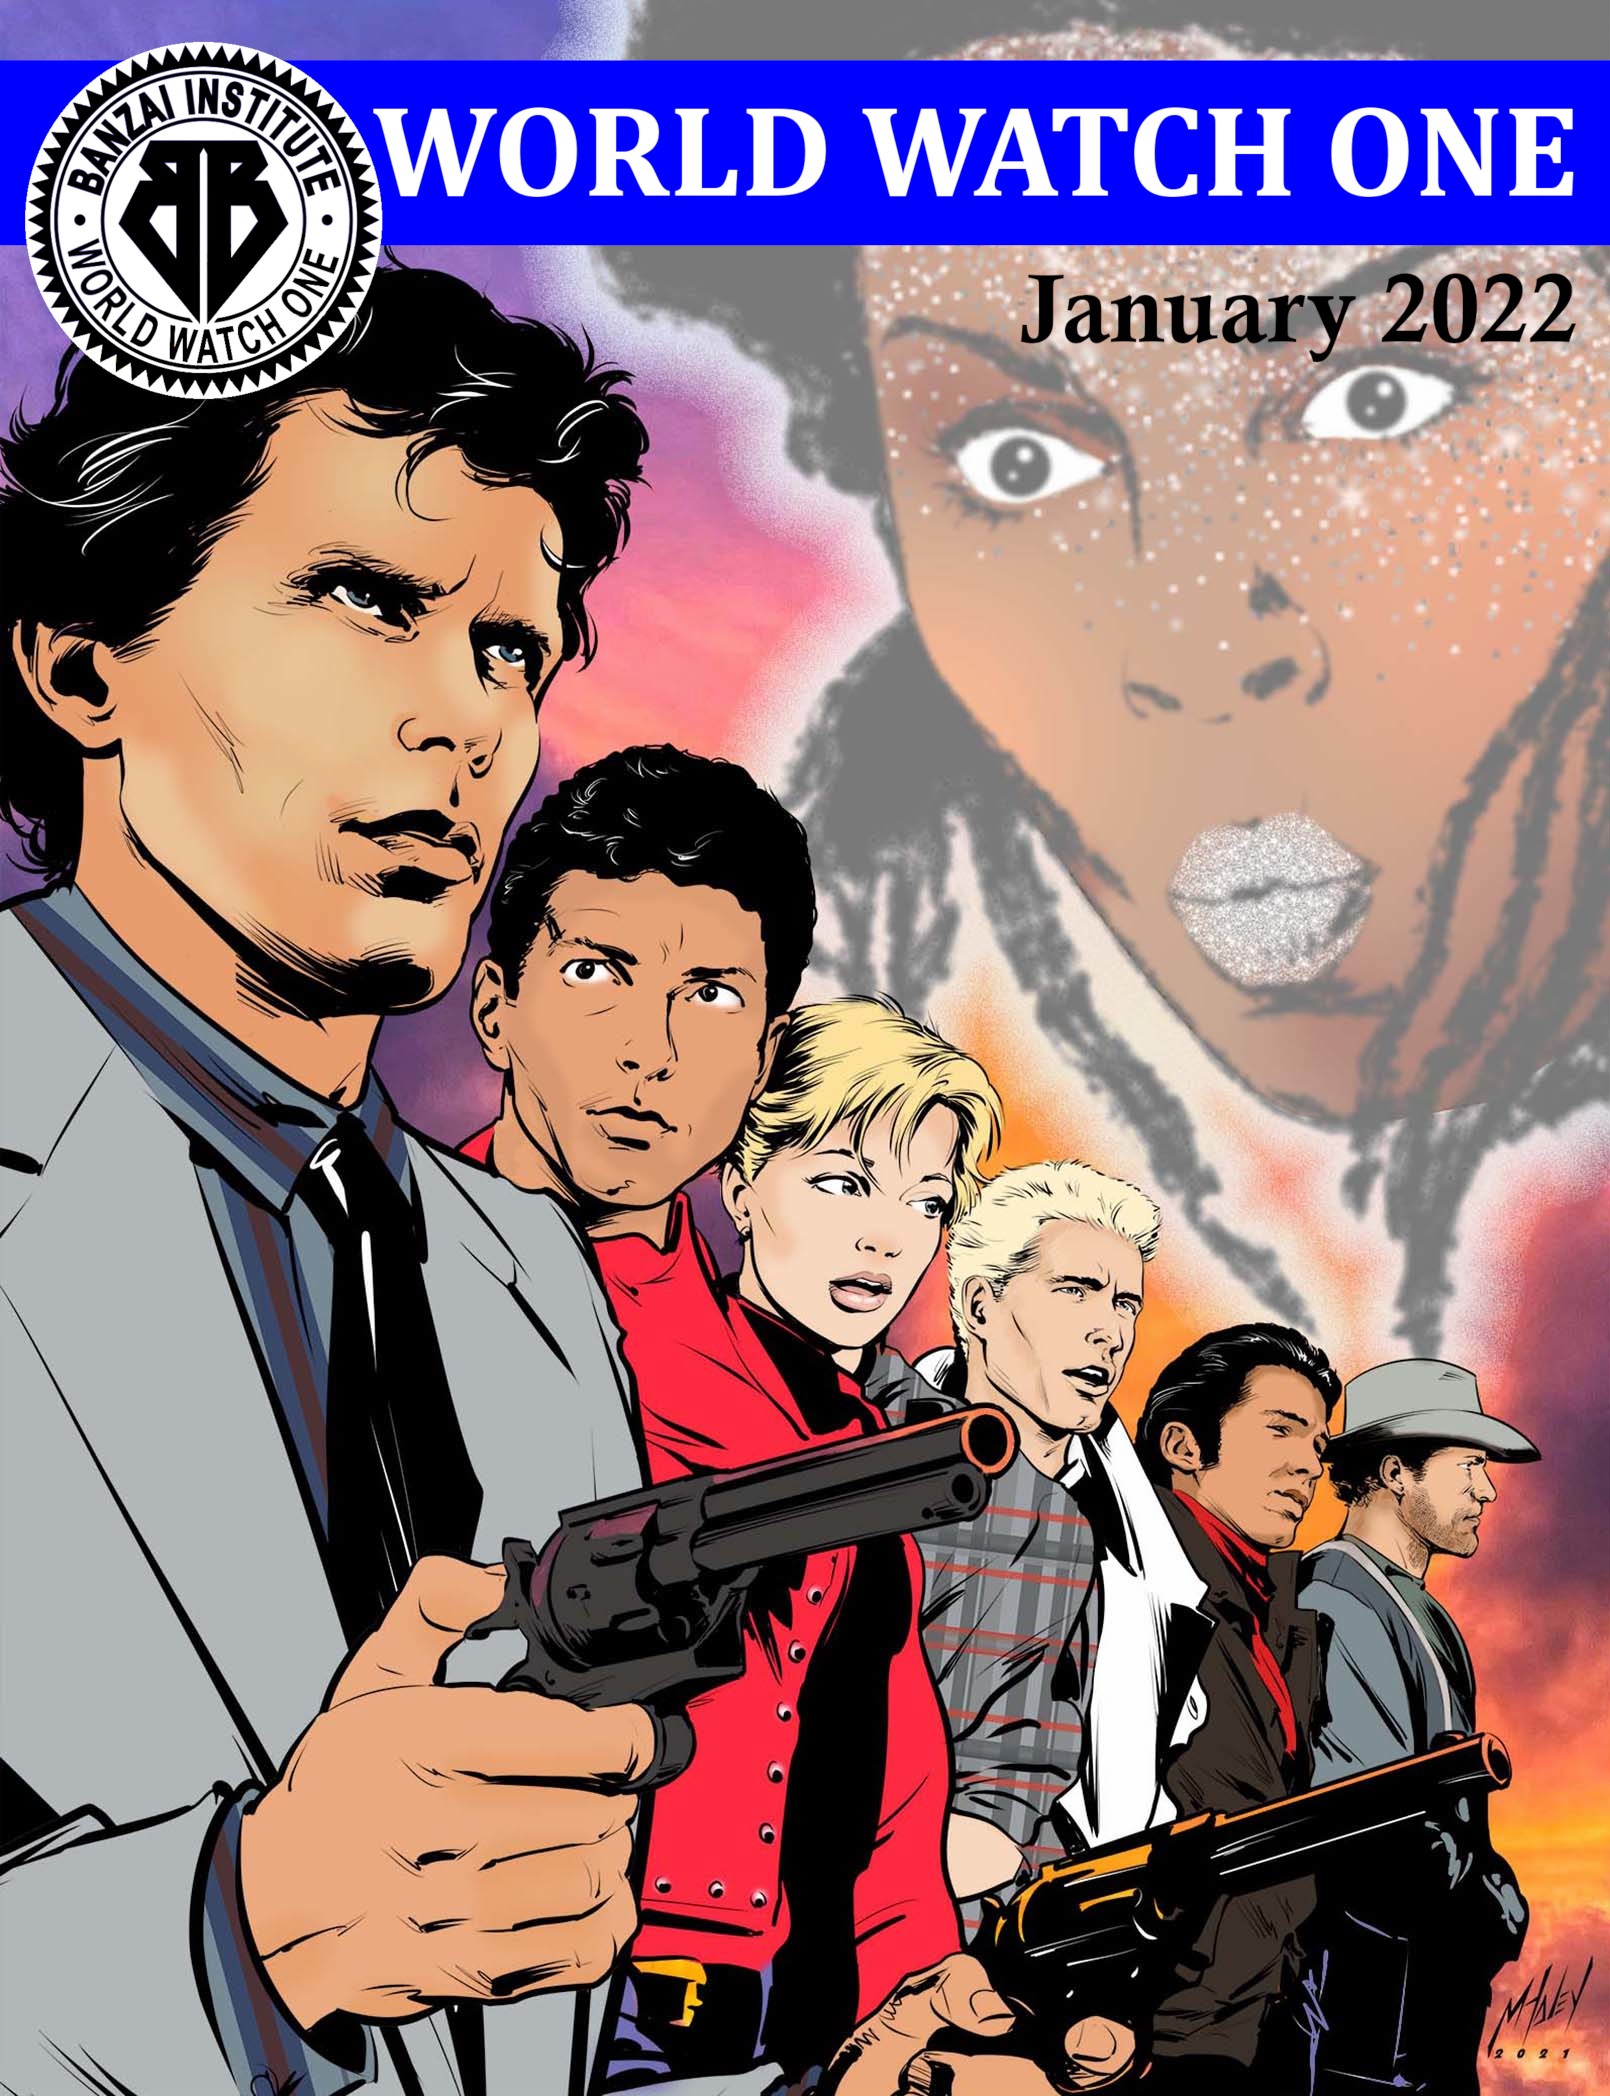 World Watch One January 25th, 2022